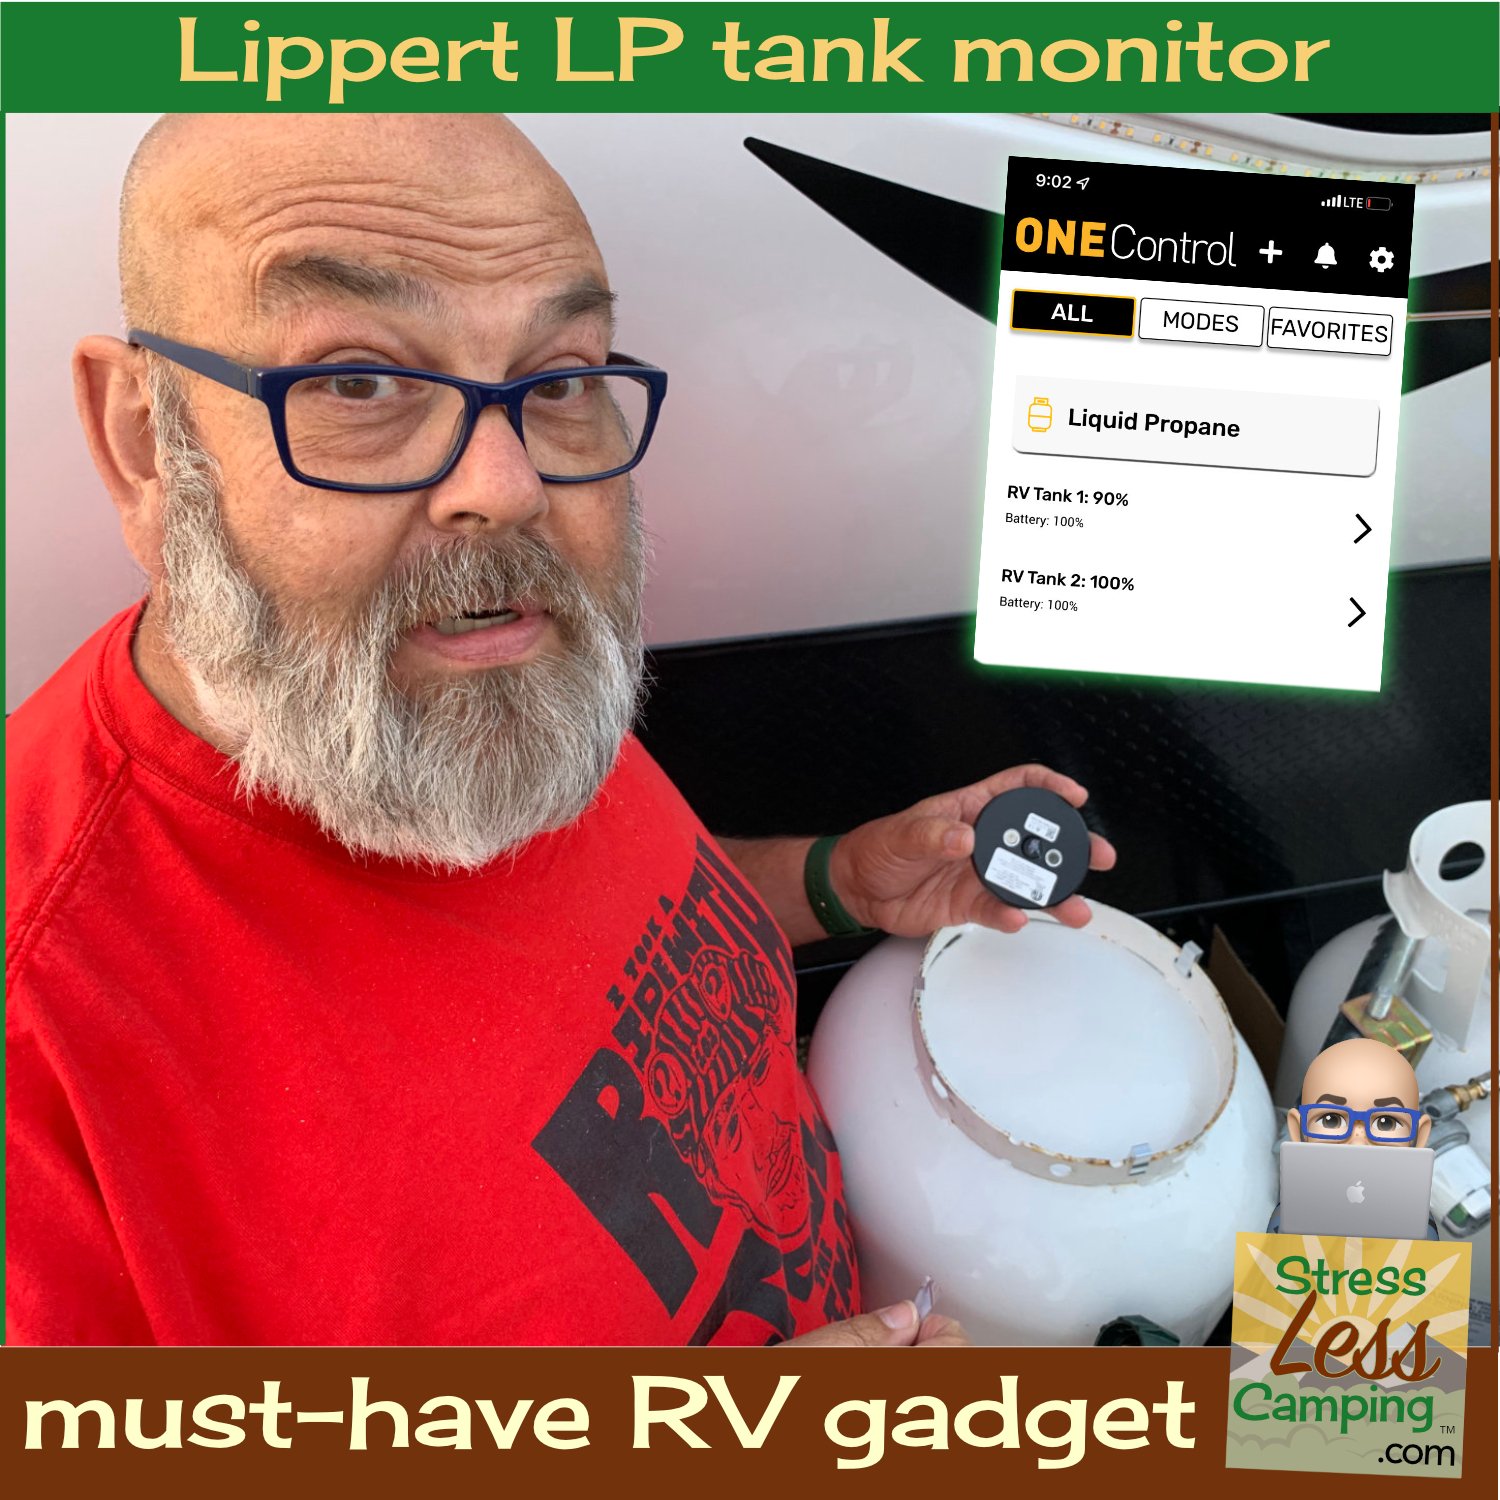 Lippert LP tank monitor hero.jpg